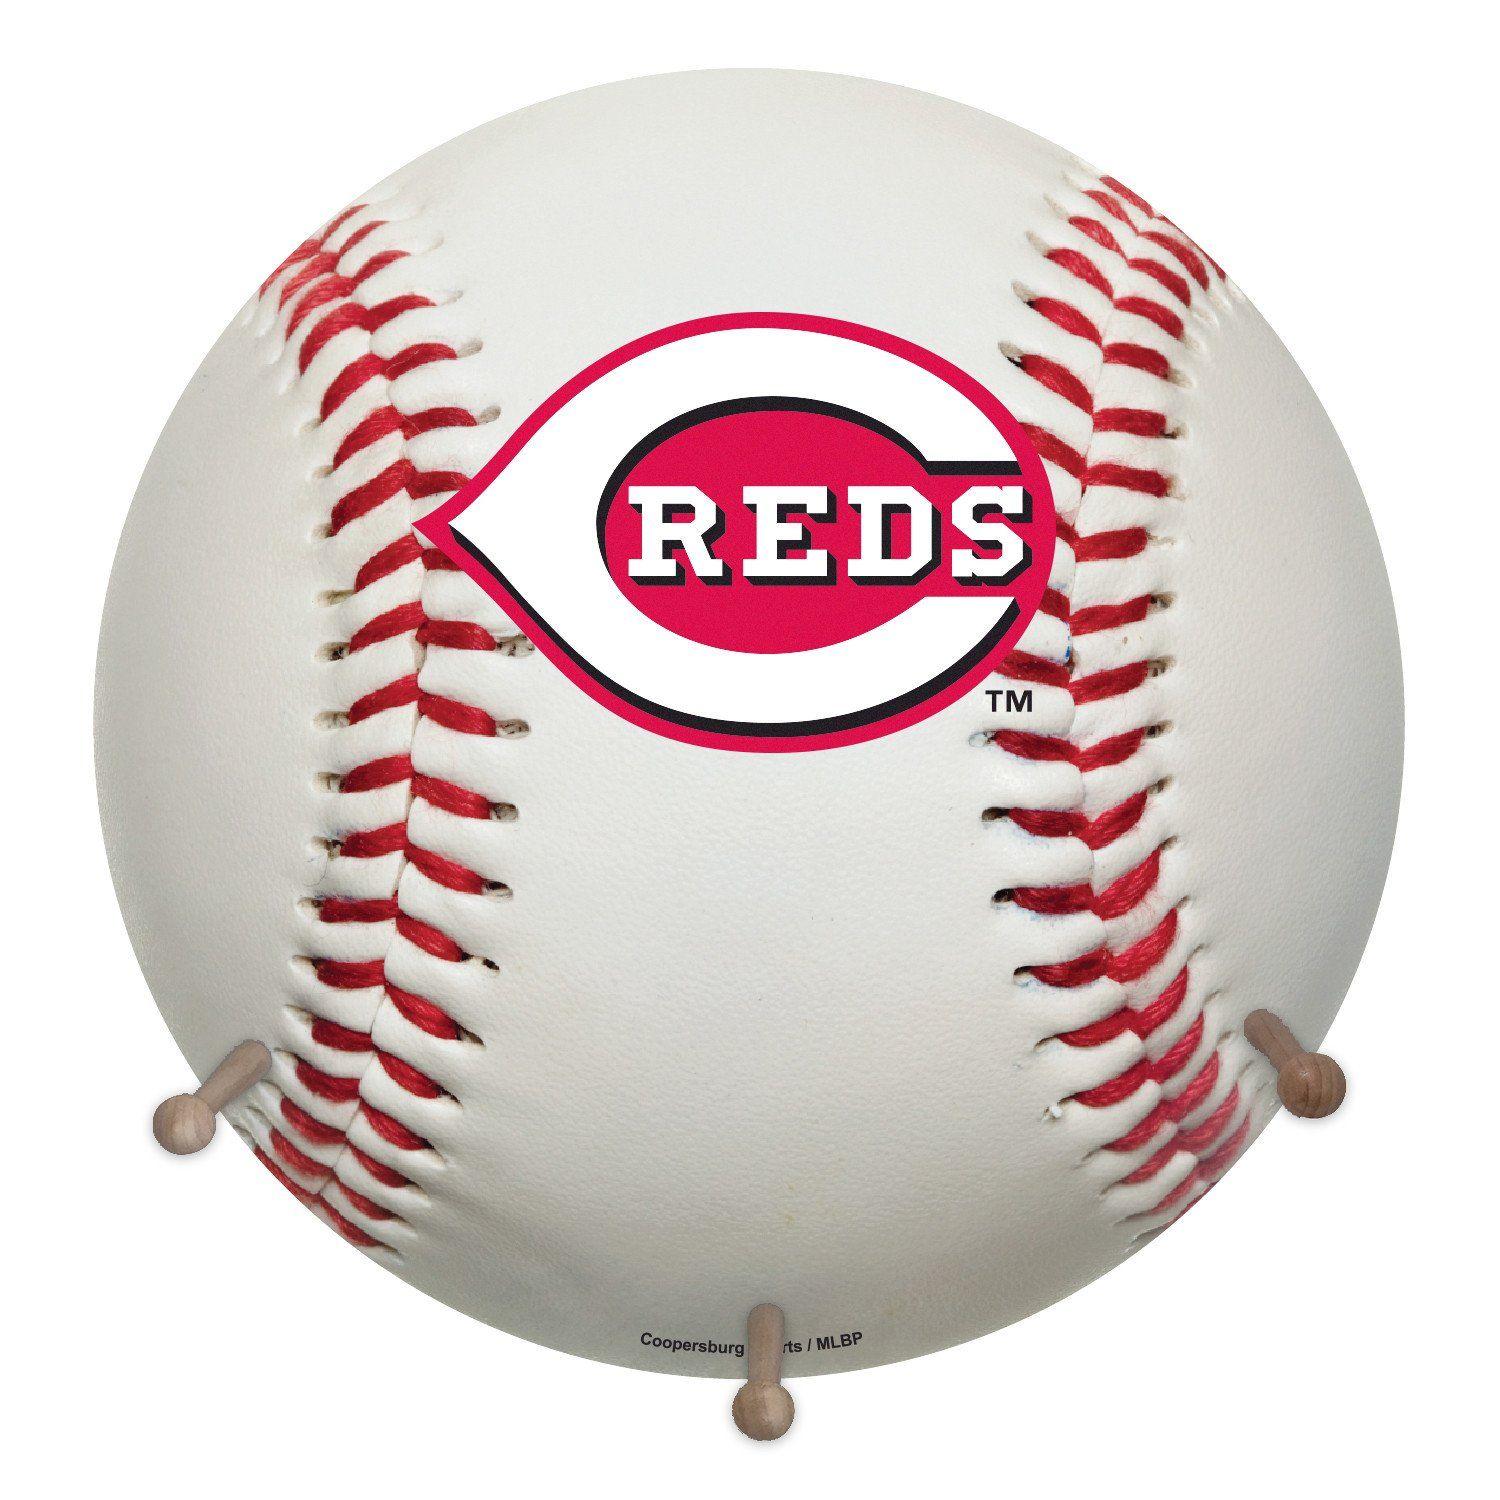 Reds Baseball Logo - Cincinnati Reds Baseball Coat Rack Team Logo | coopersburg